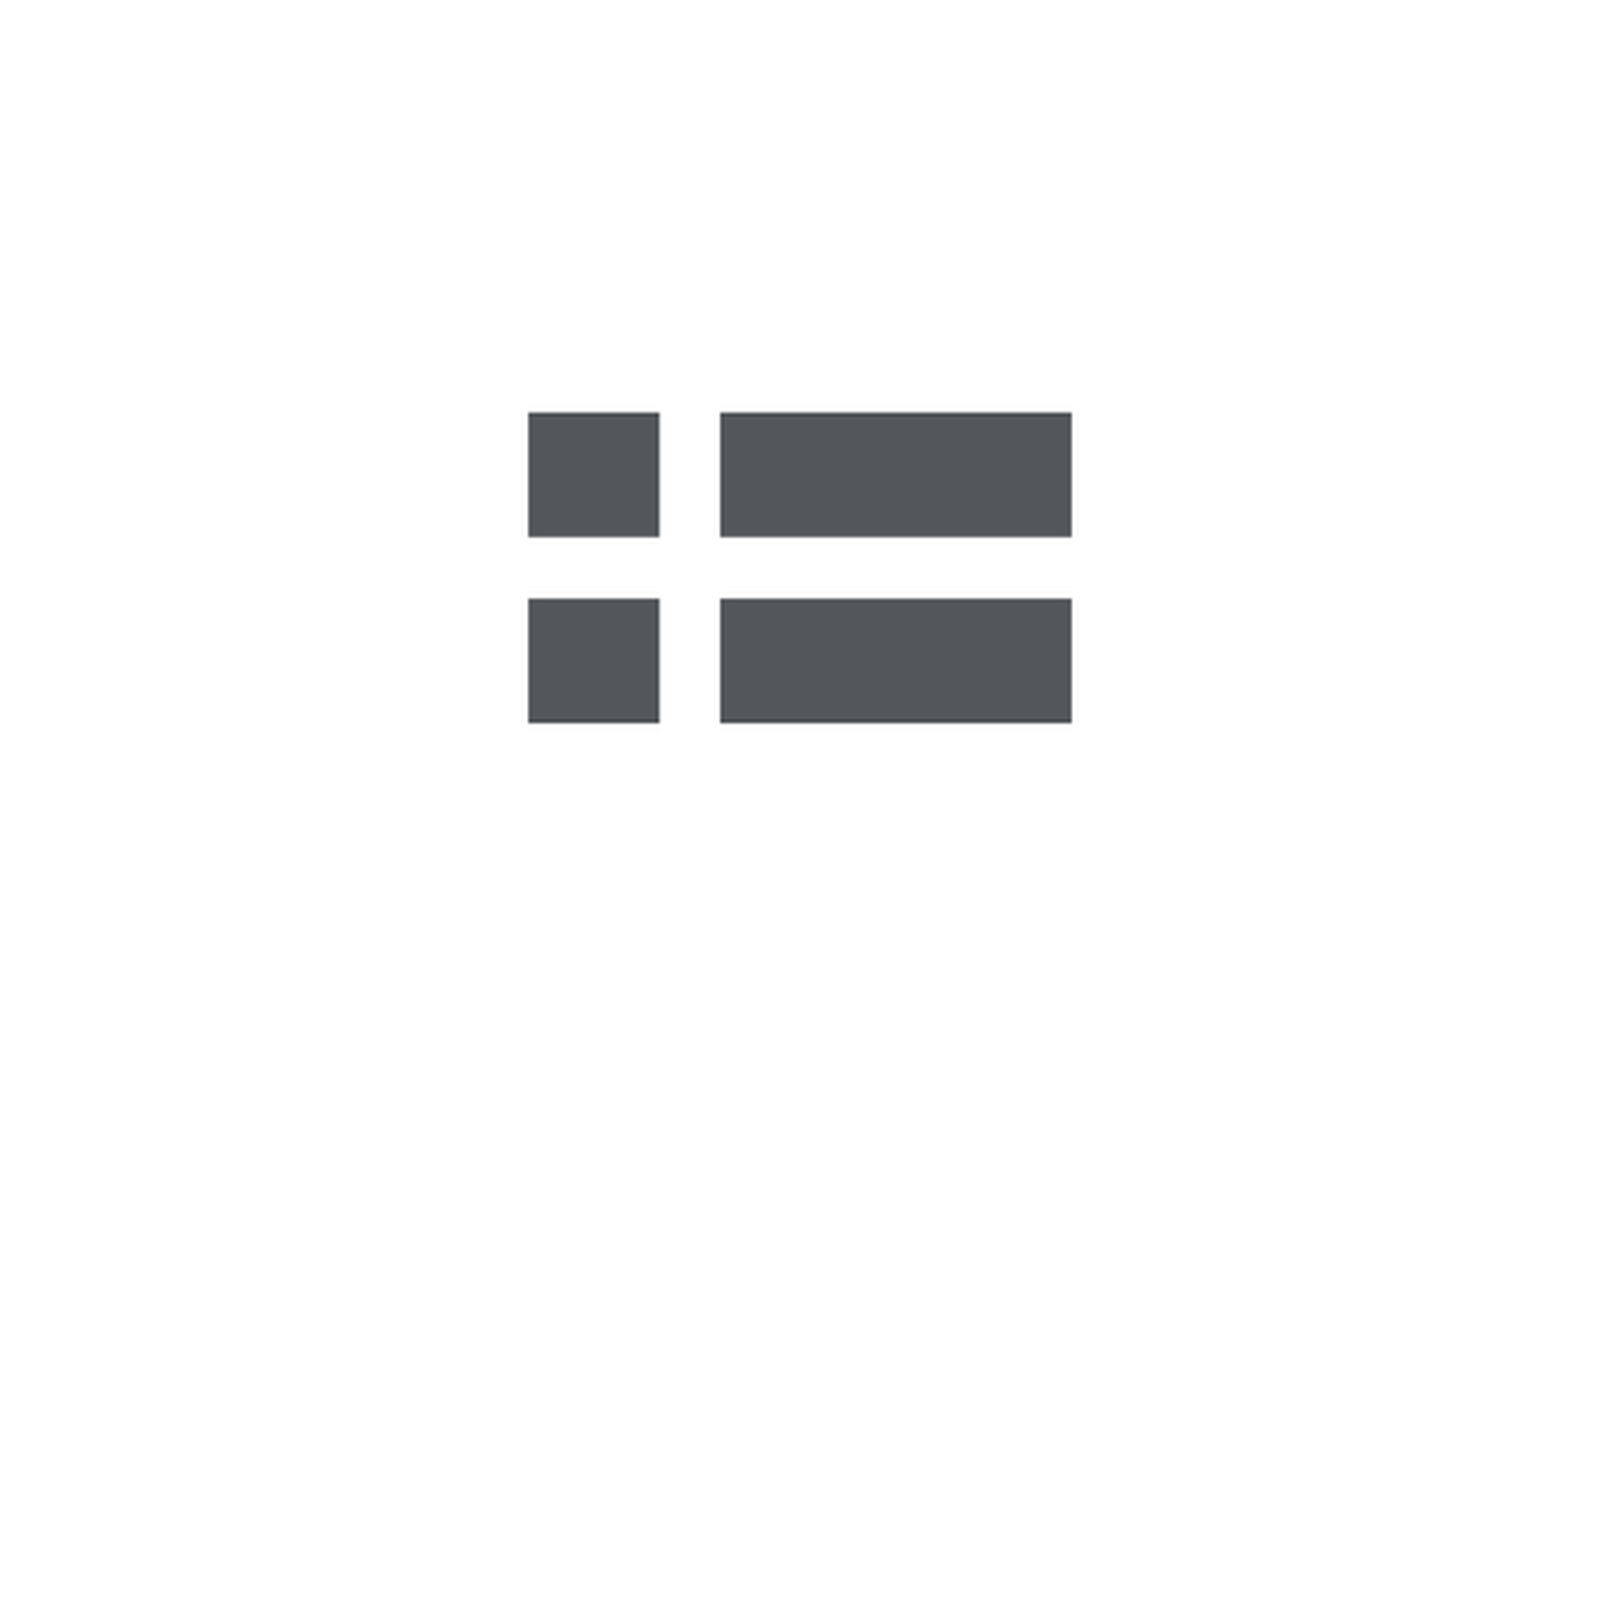 icon made in Denmark